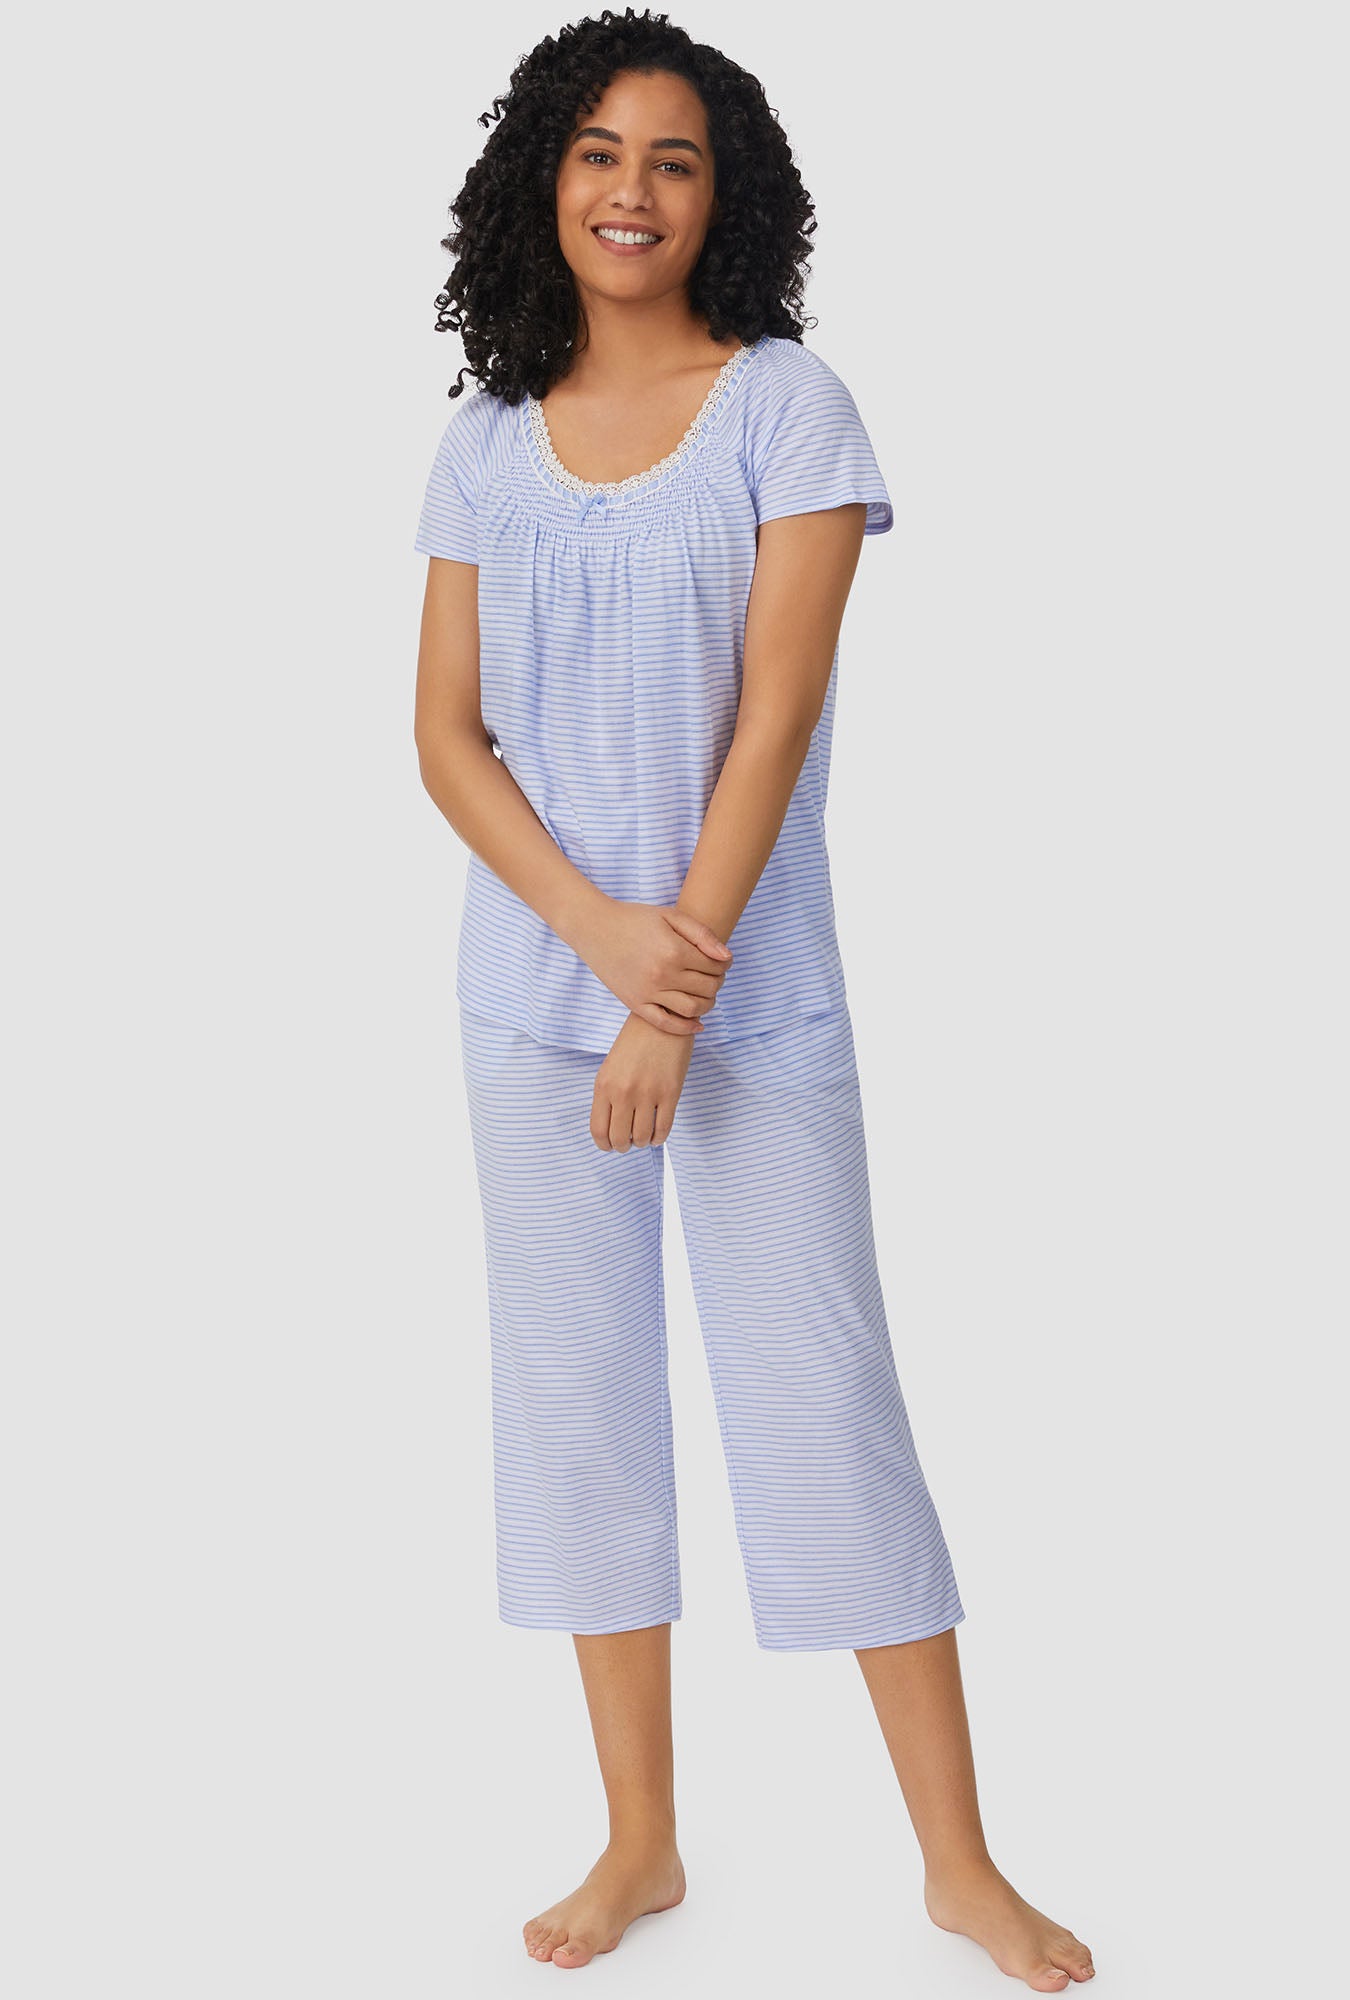 Blue Horizontal Stripe Cap Sleeve Capri PJ Set - Aria Sleepwear